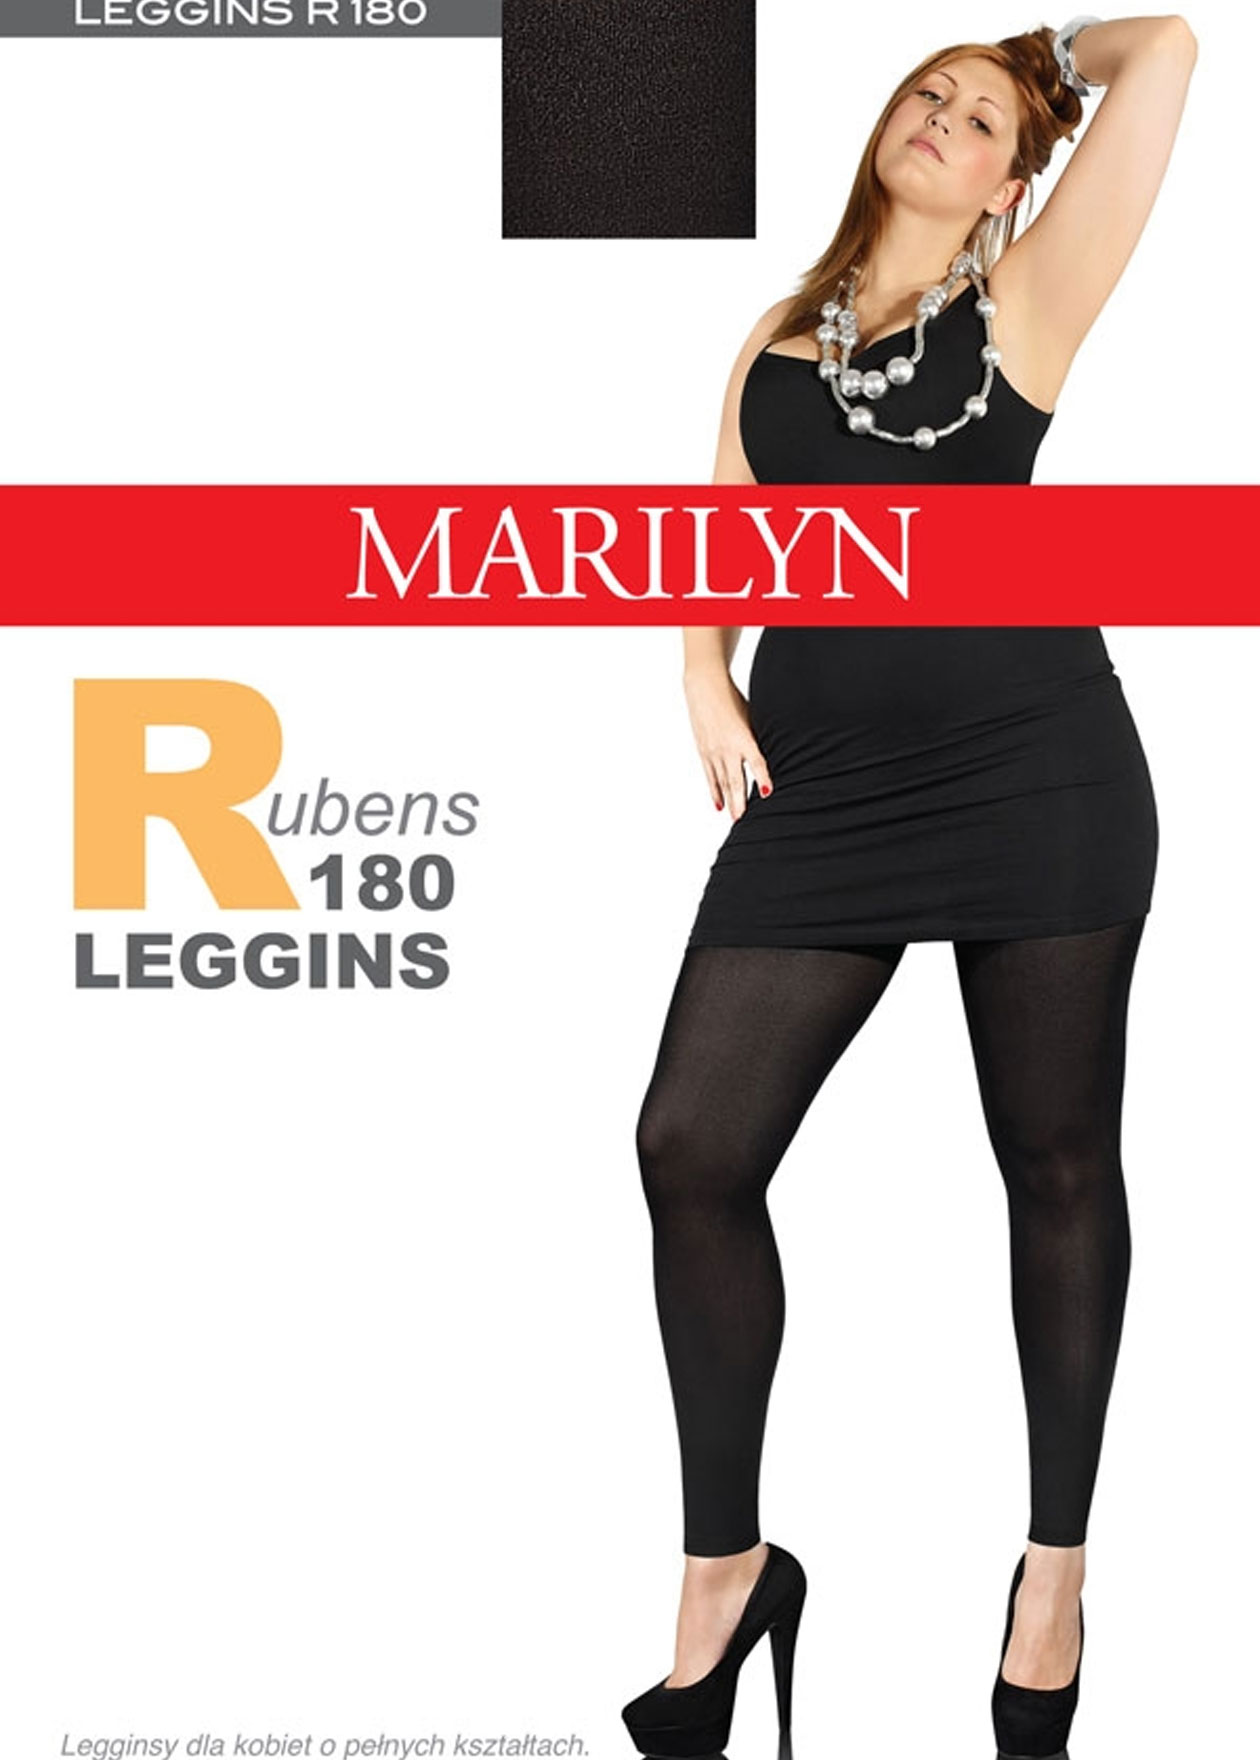 Marilyn Rubens 180